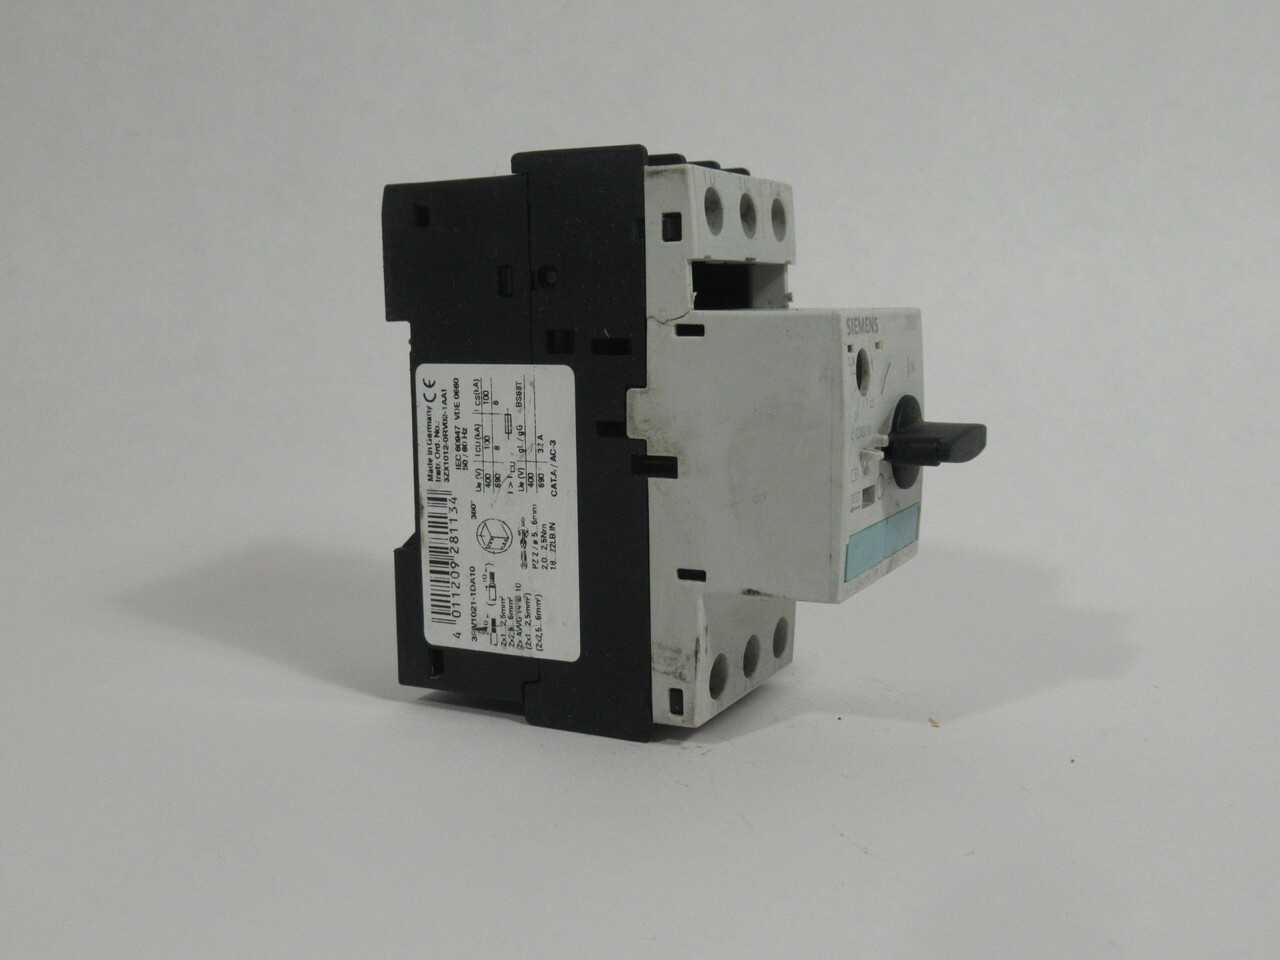 Siemens 3RV1021-1DA10 Circuit Breaker 2.2-3.2A 690VAC MISSING PLASTIC COVER USED